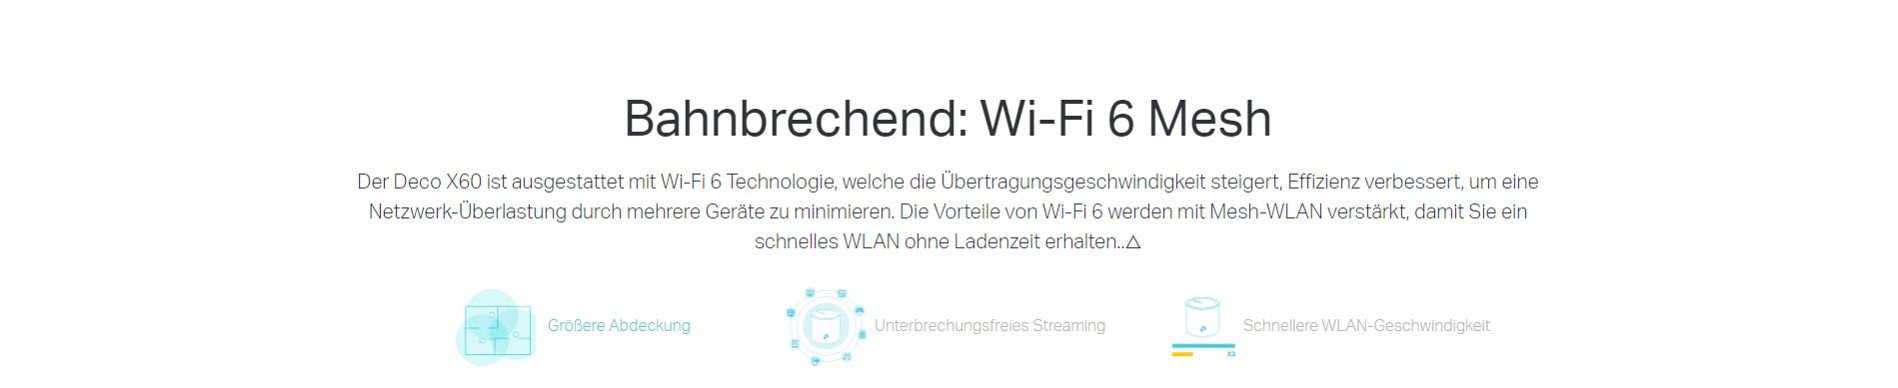 Bahnbrechend: Wi-Fi 6 Mesh